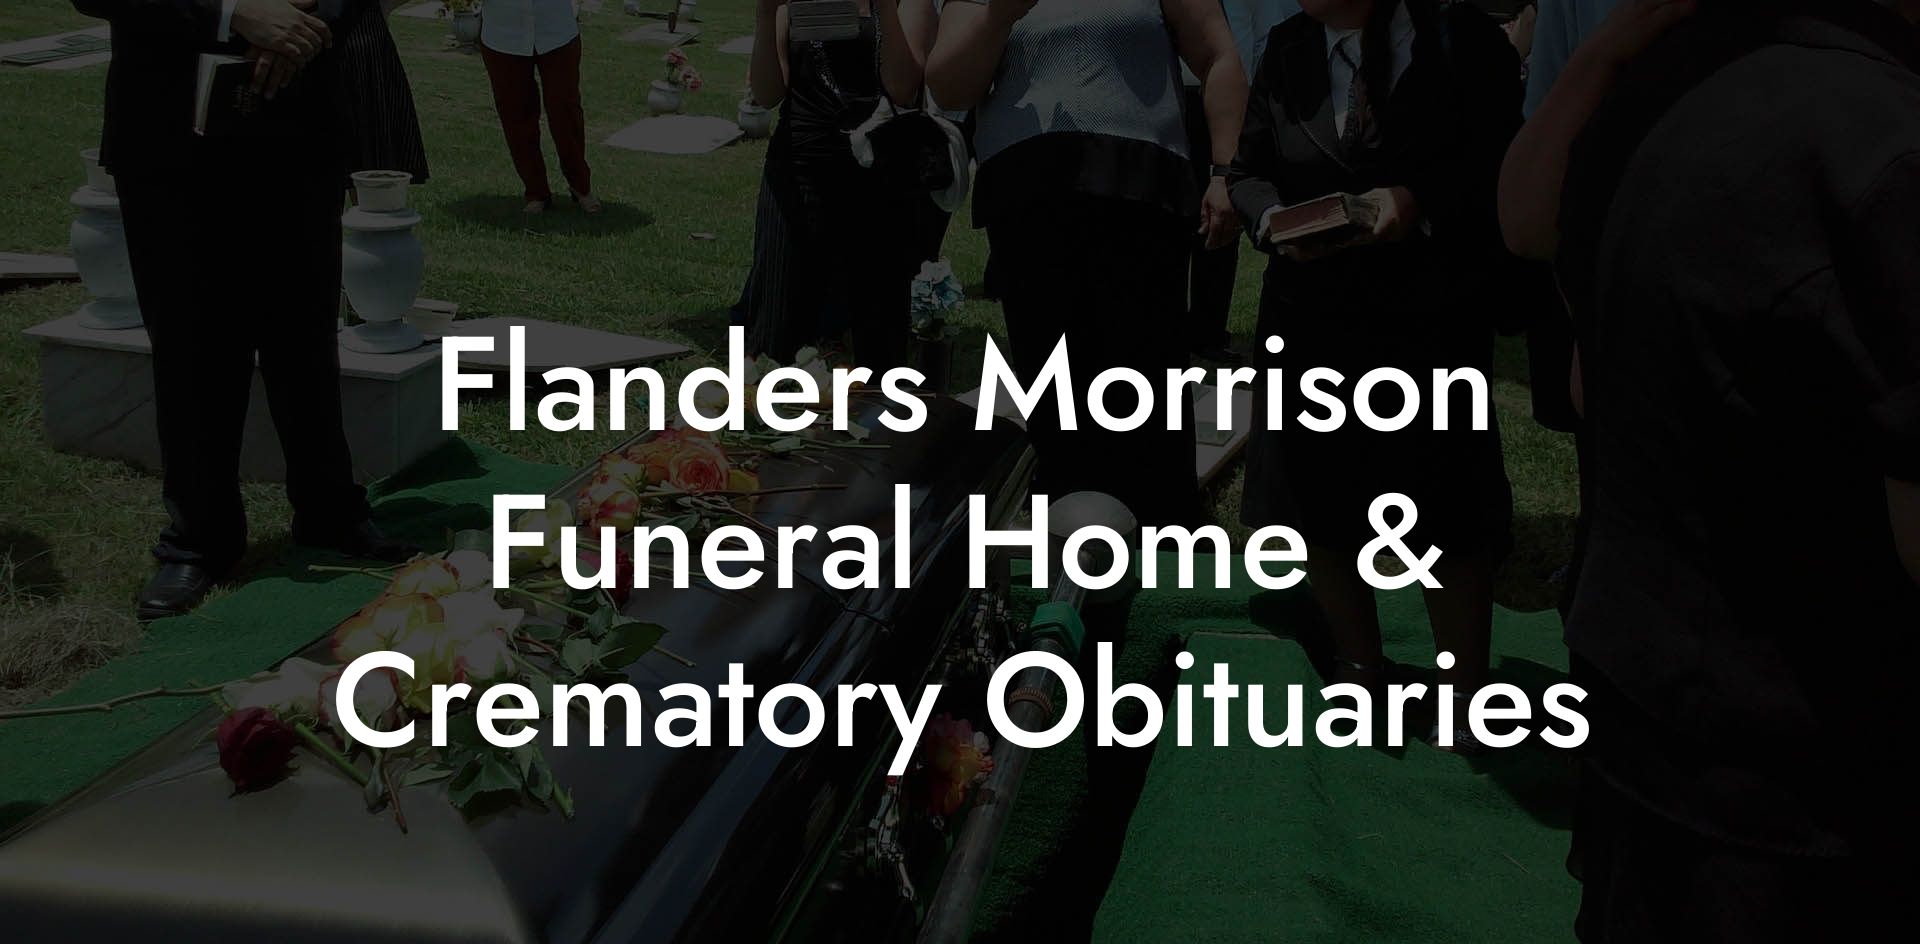 Flanders Morrison Funeral Home & Crematory Obituaries